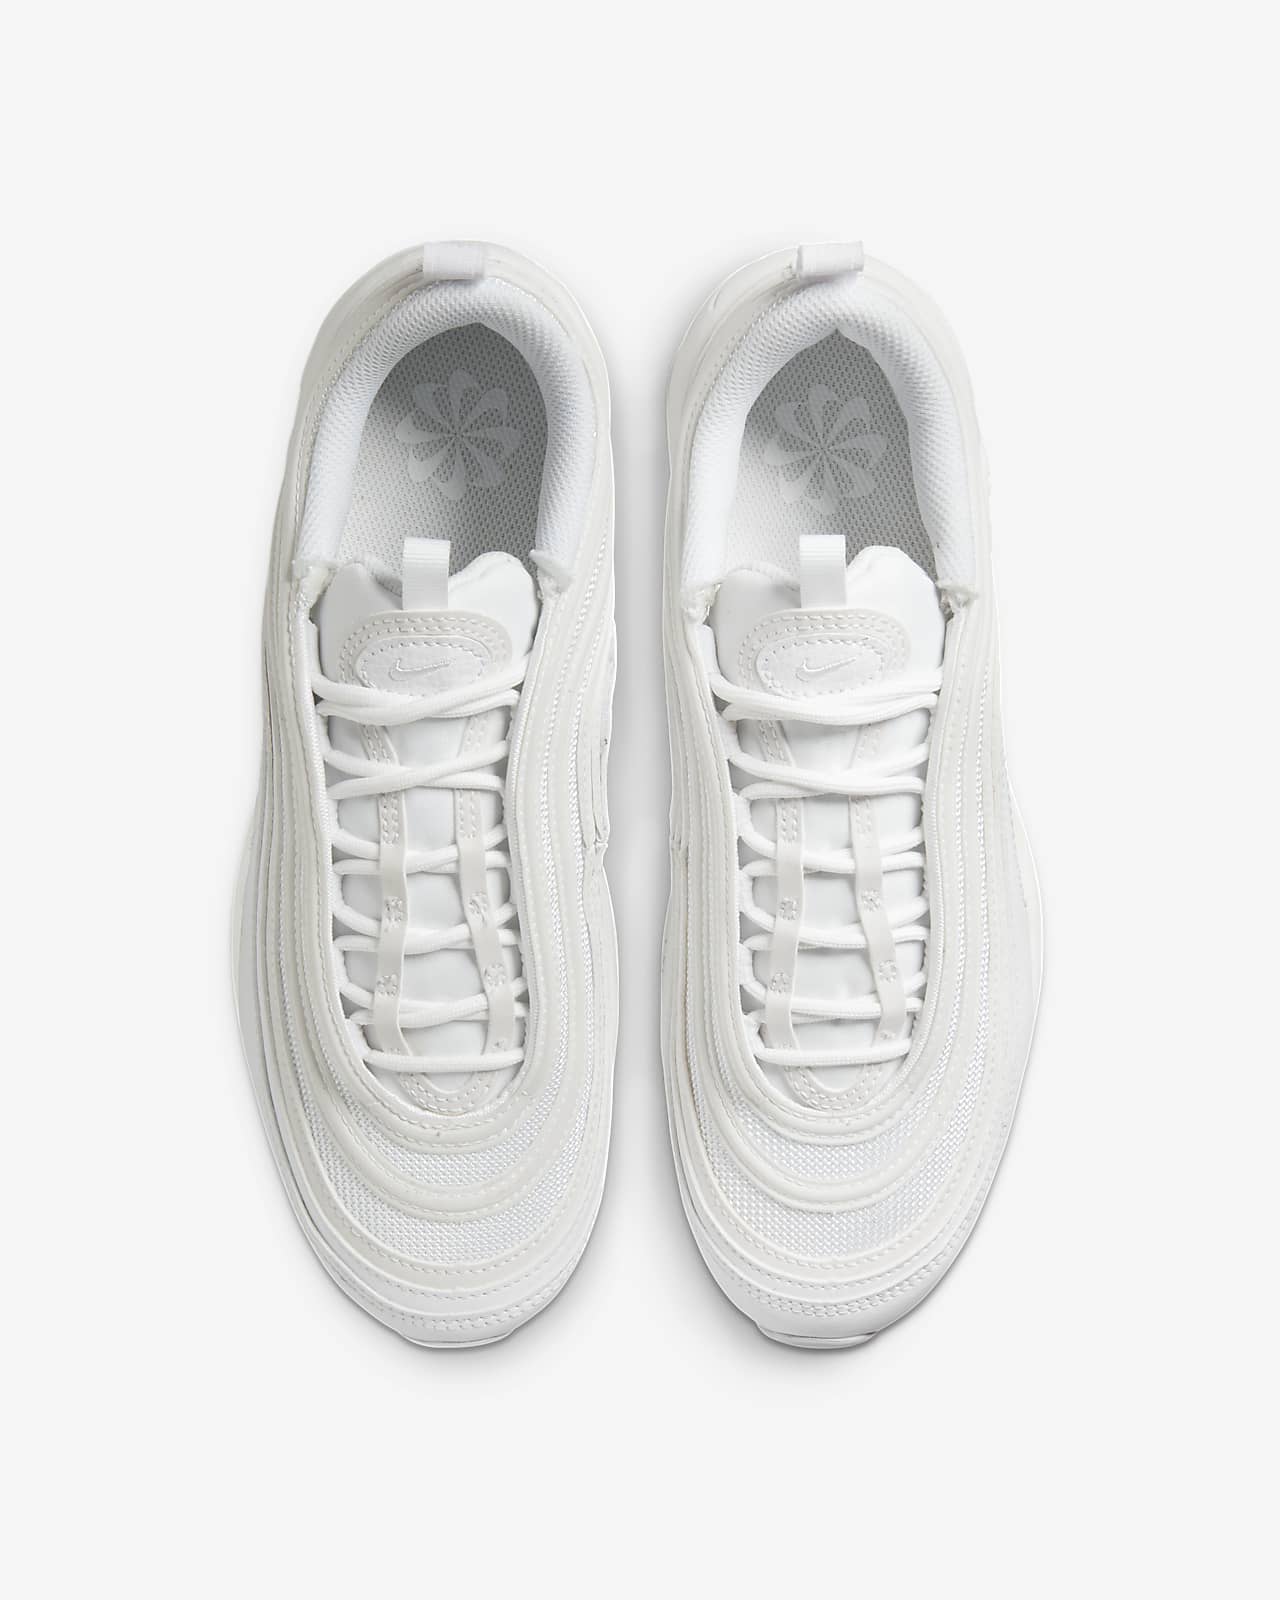 Nike Air Max 97 Triple White Shoes